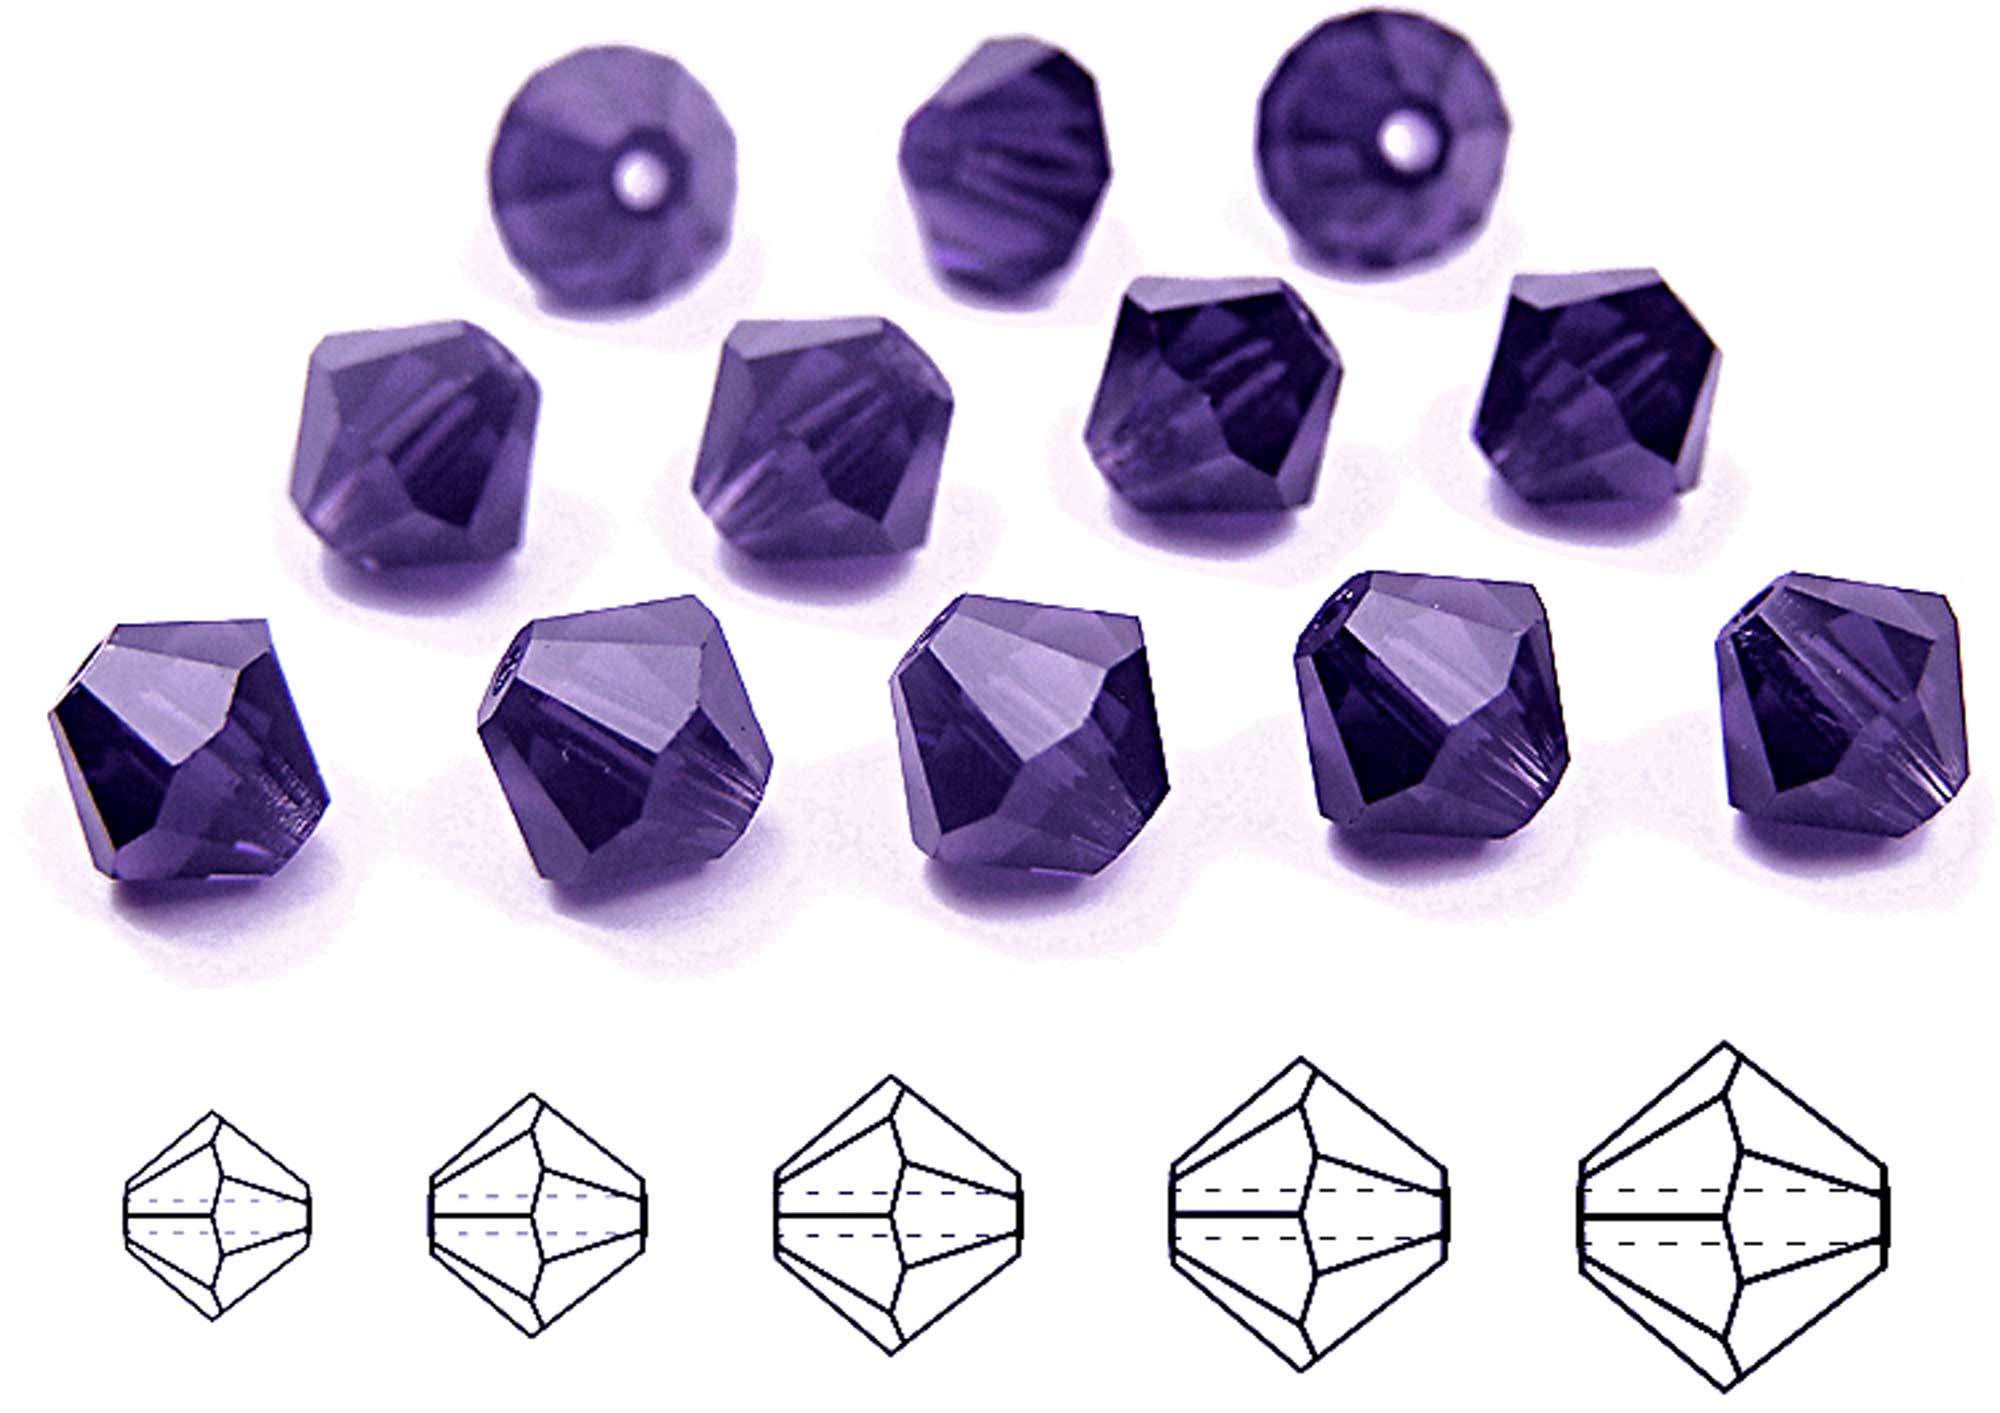 Tanzanite (Deep Tanzanite), Czech Glass Beads, Machine Cut Bicones (MC Rondell, Diamond Shape), deep purple crystals